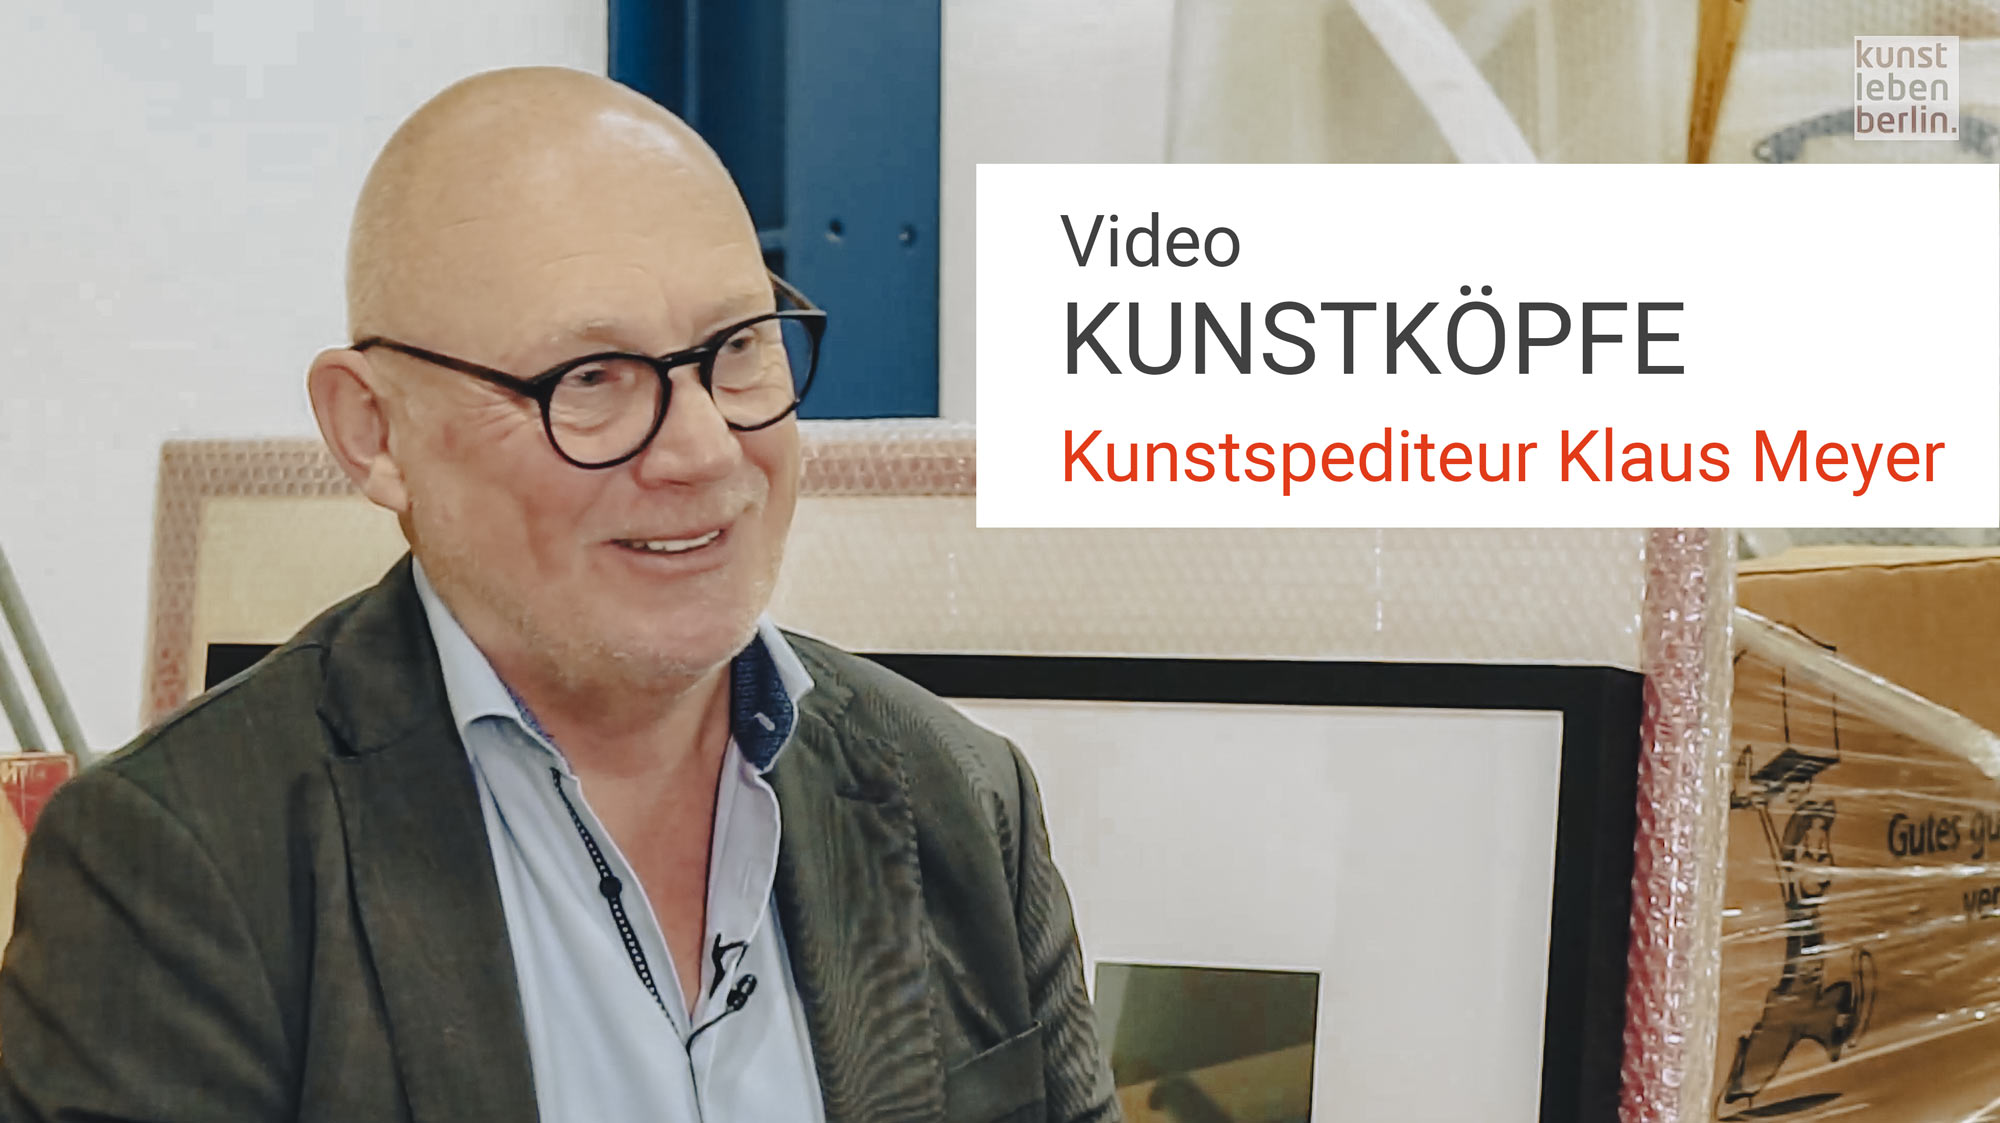 Klaus Meyer, AGS Froesch, Kunstspedition, Kunstköpfe, Kunstleben Berlin